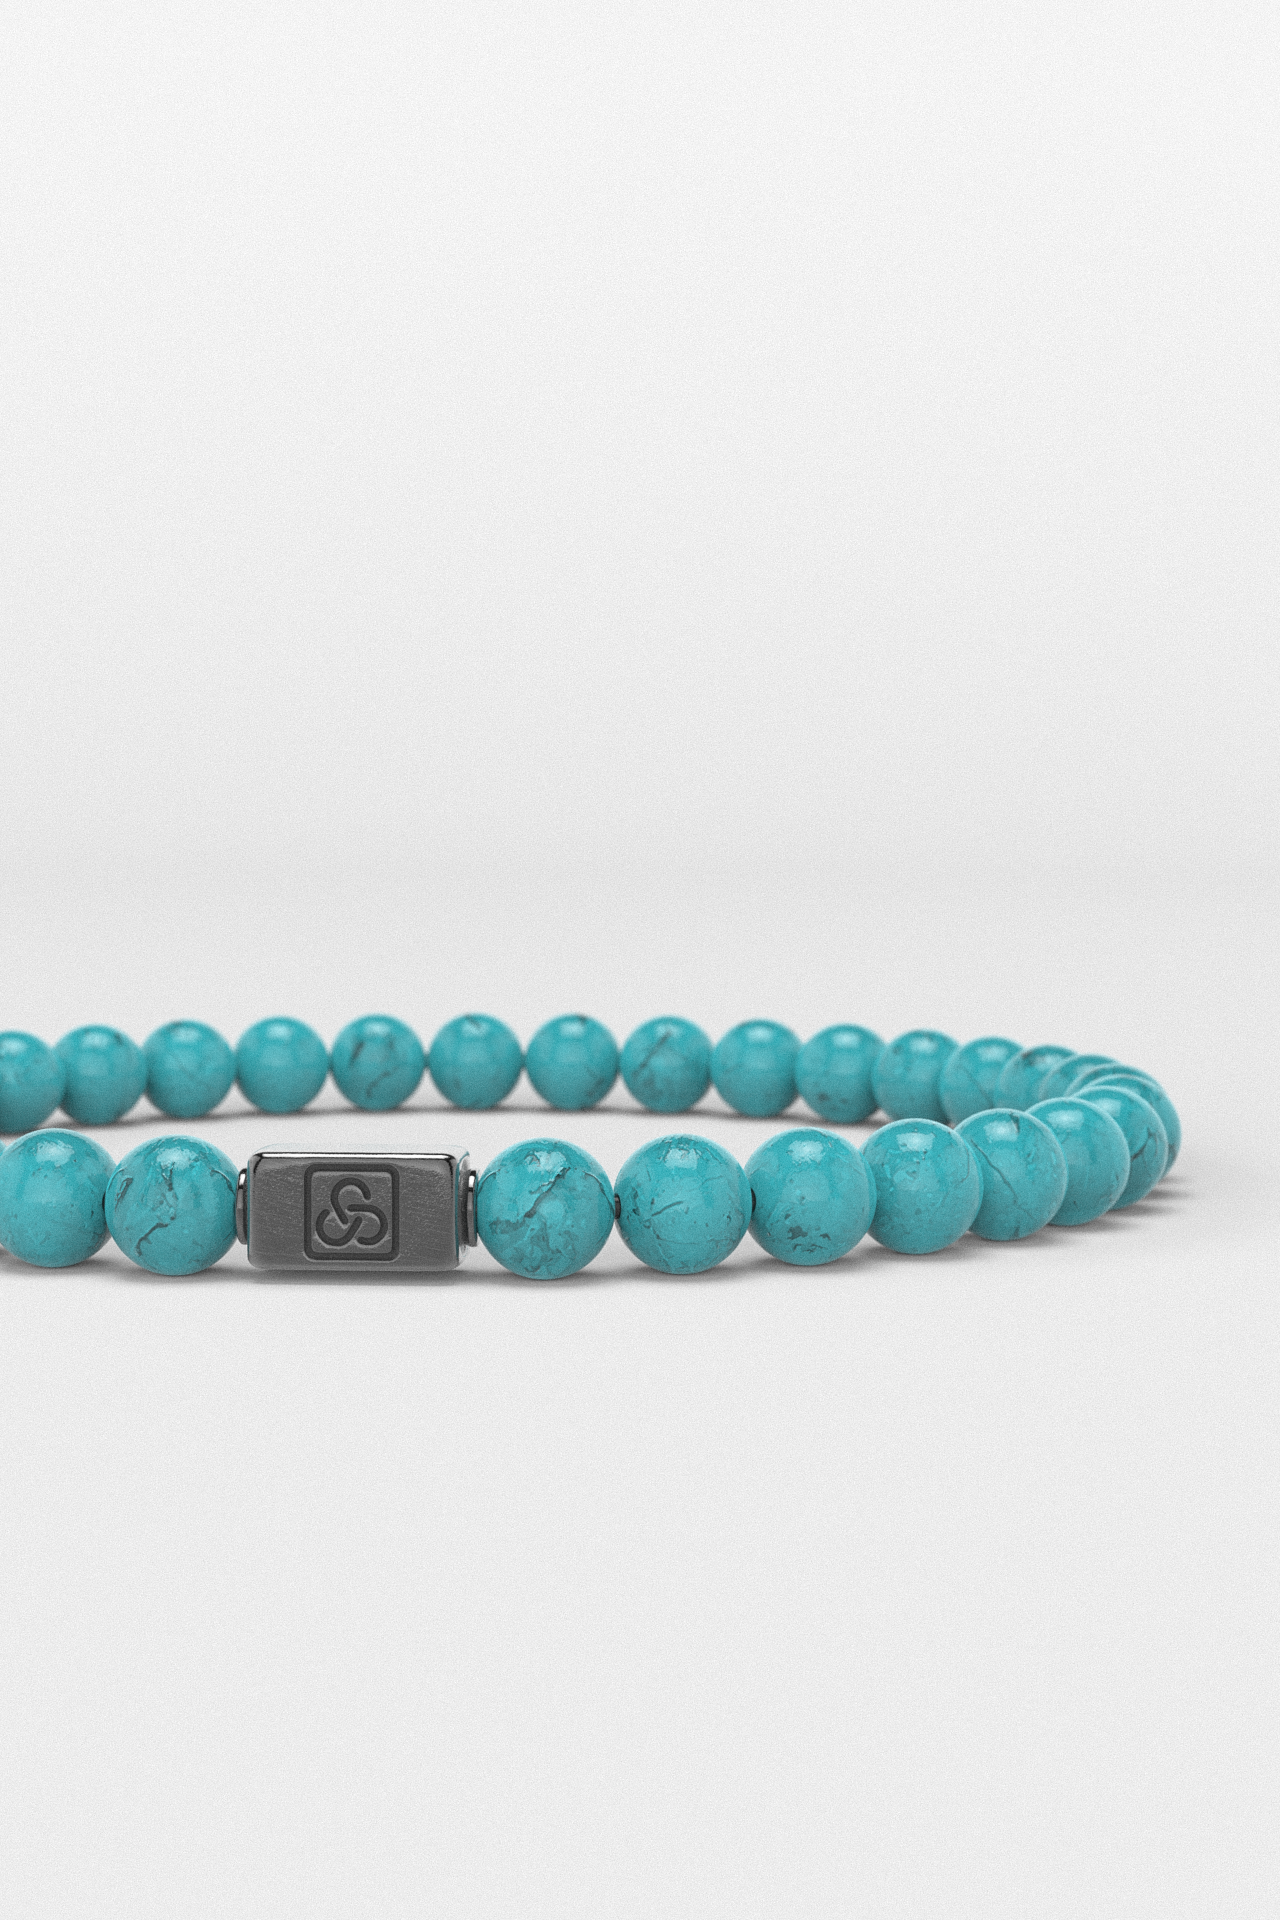 Turquoise Bracelet 6mm | Essential